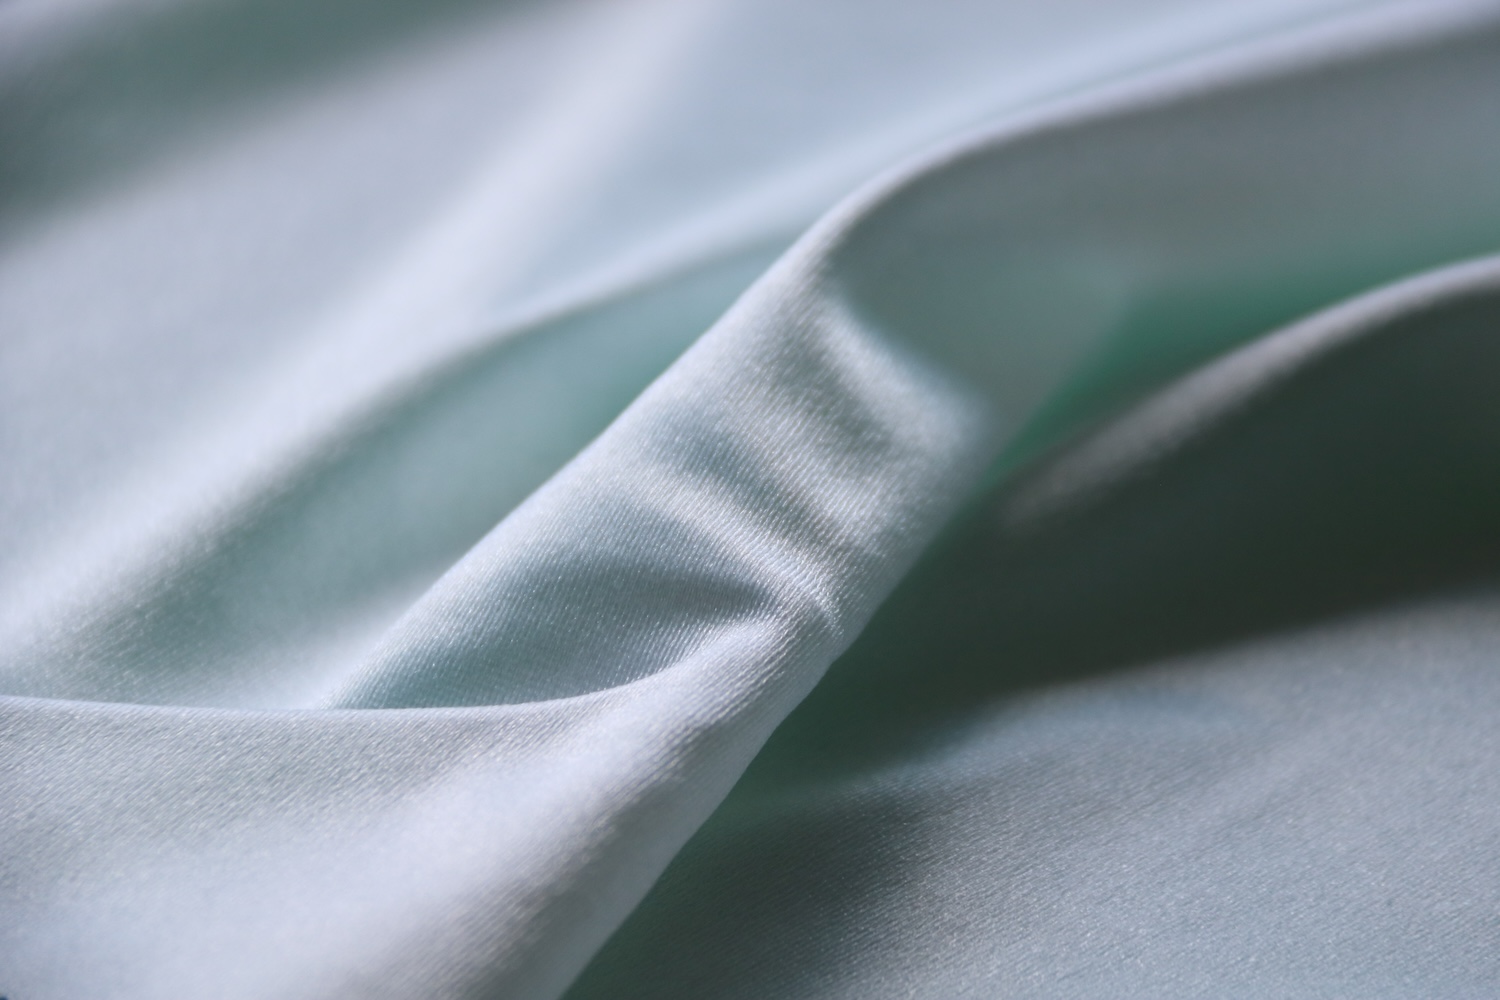 Raschel Locknit fabric. © Karl Mayer Group